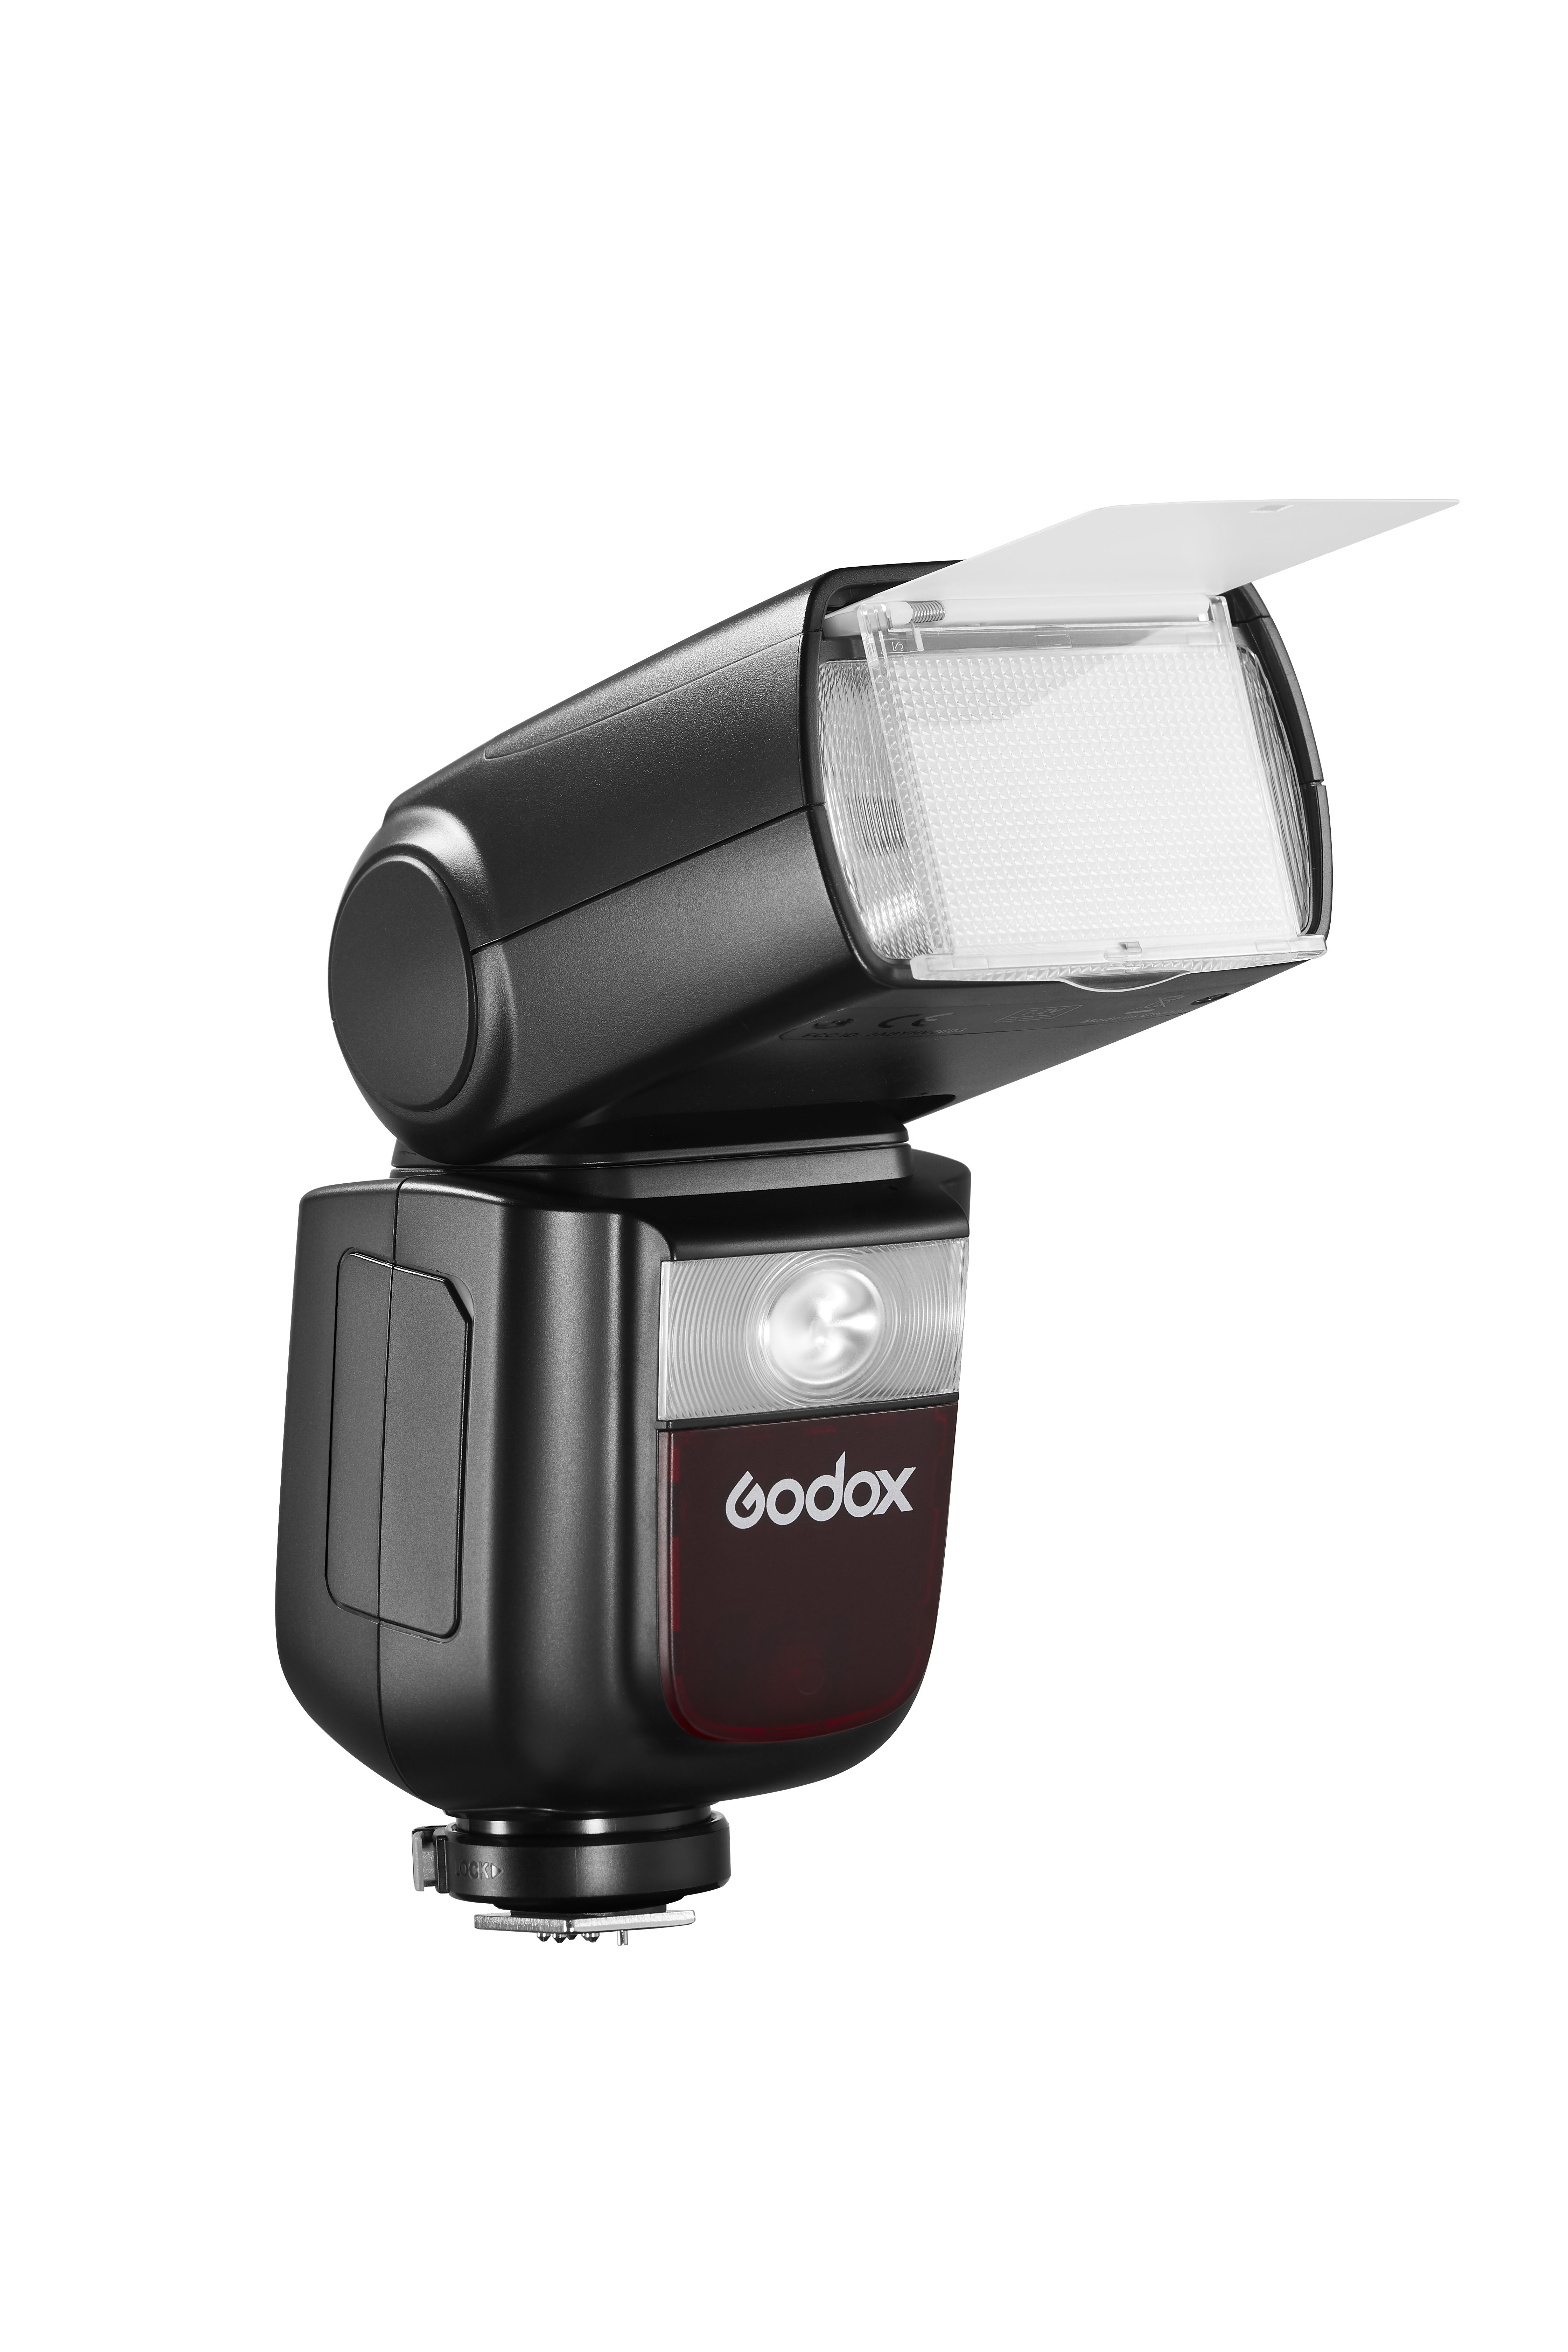 GODOX V860III Systemblitzgerät für Canon manuell) automatisch, (60